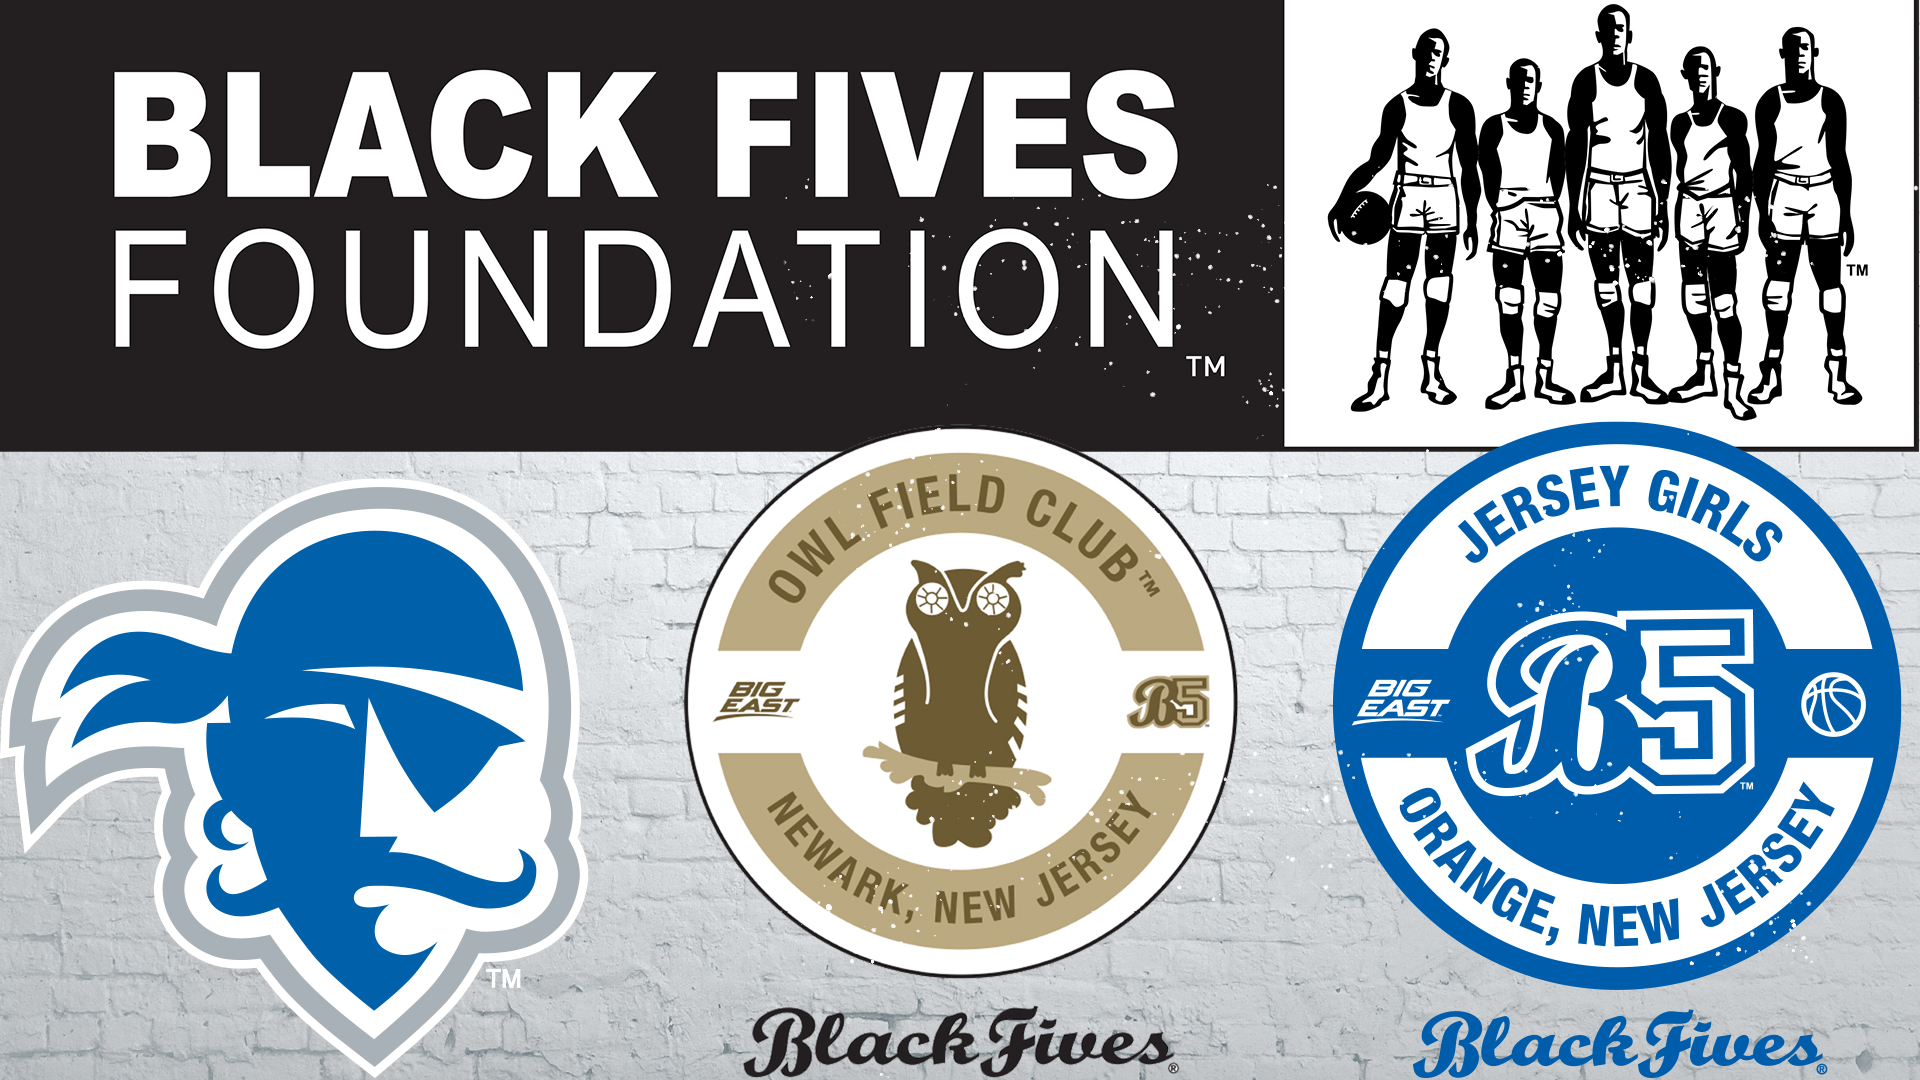 Seton Hall and the Black Fives Foundation